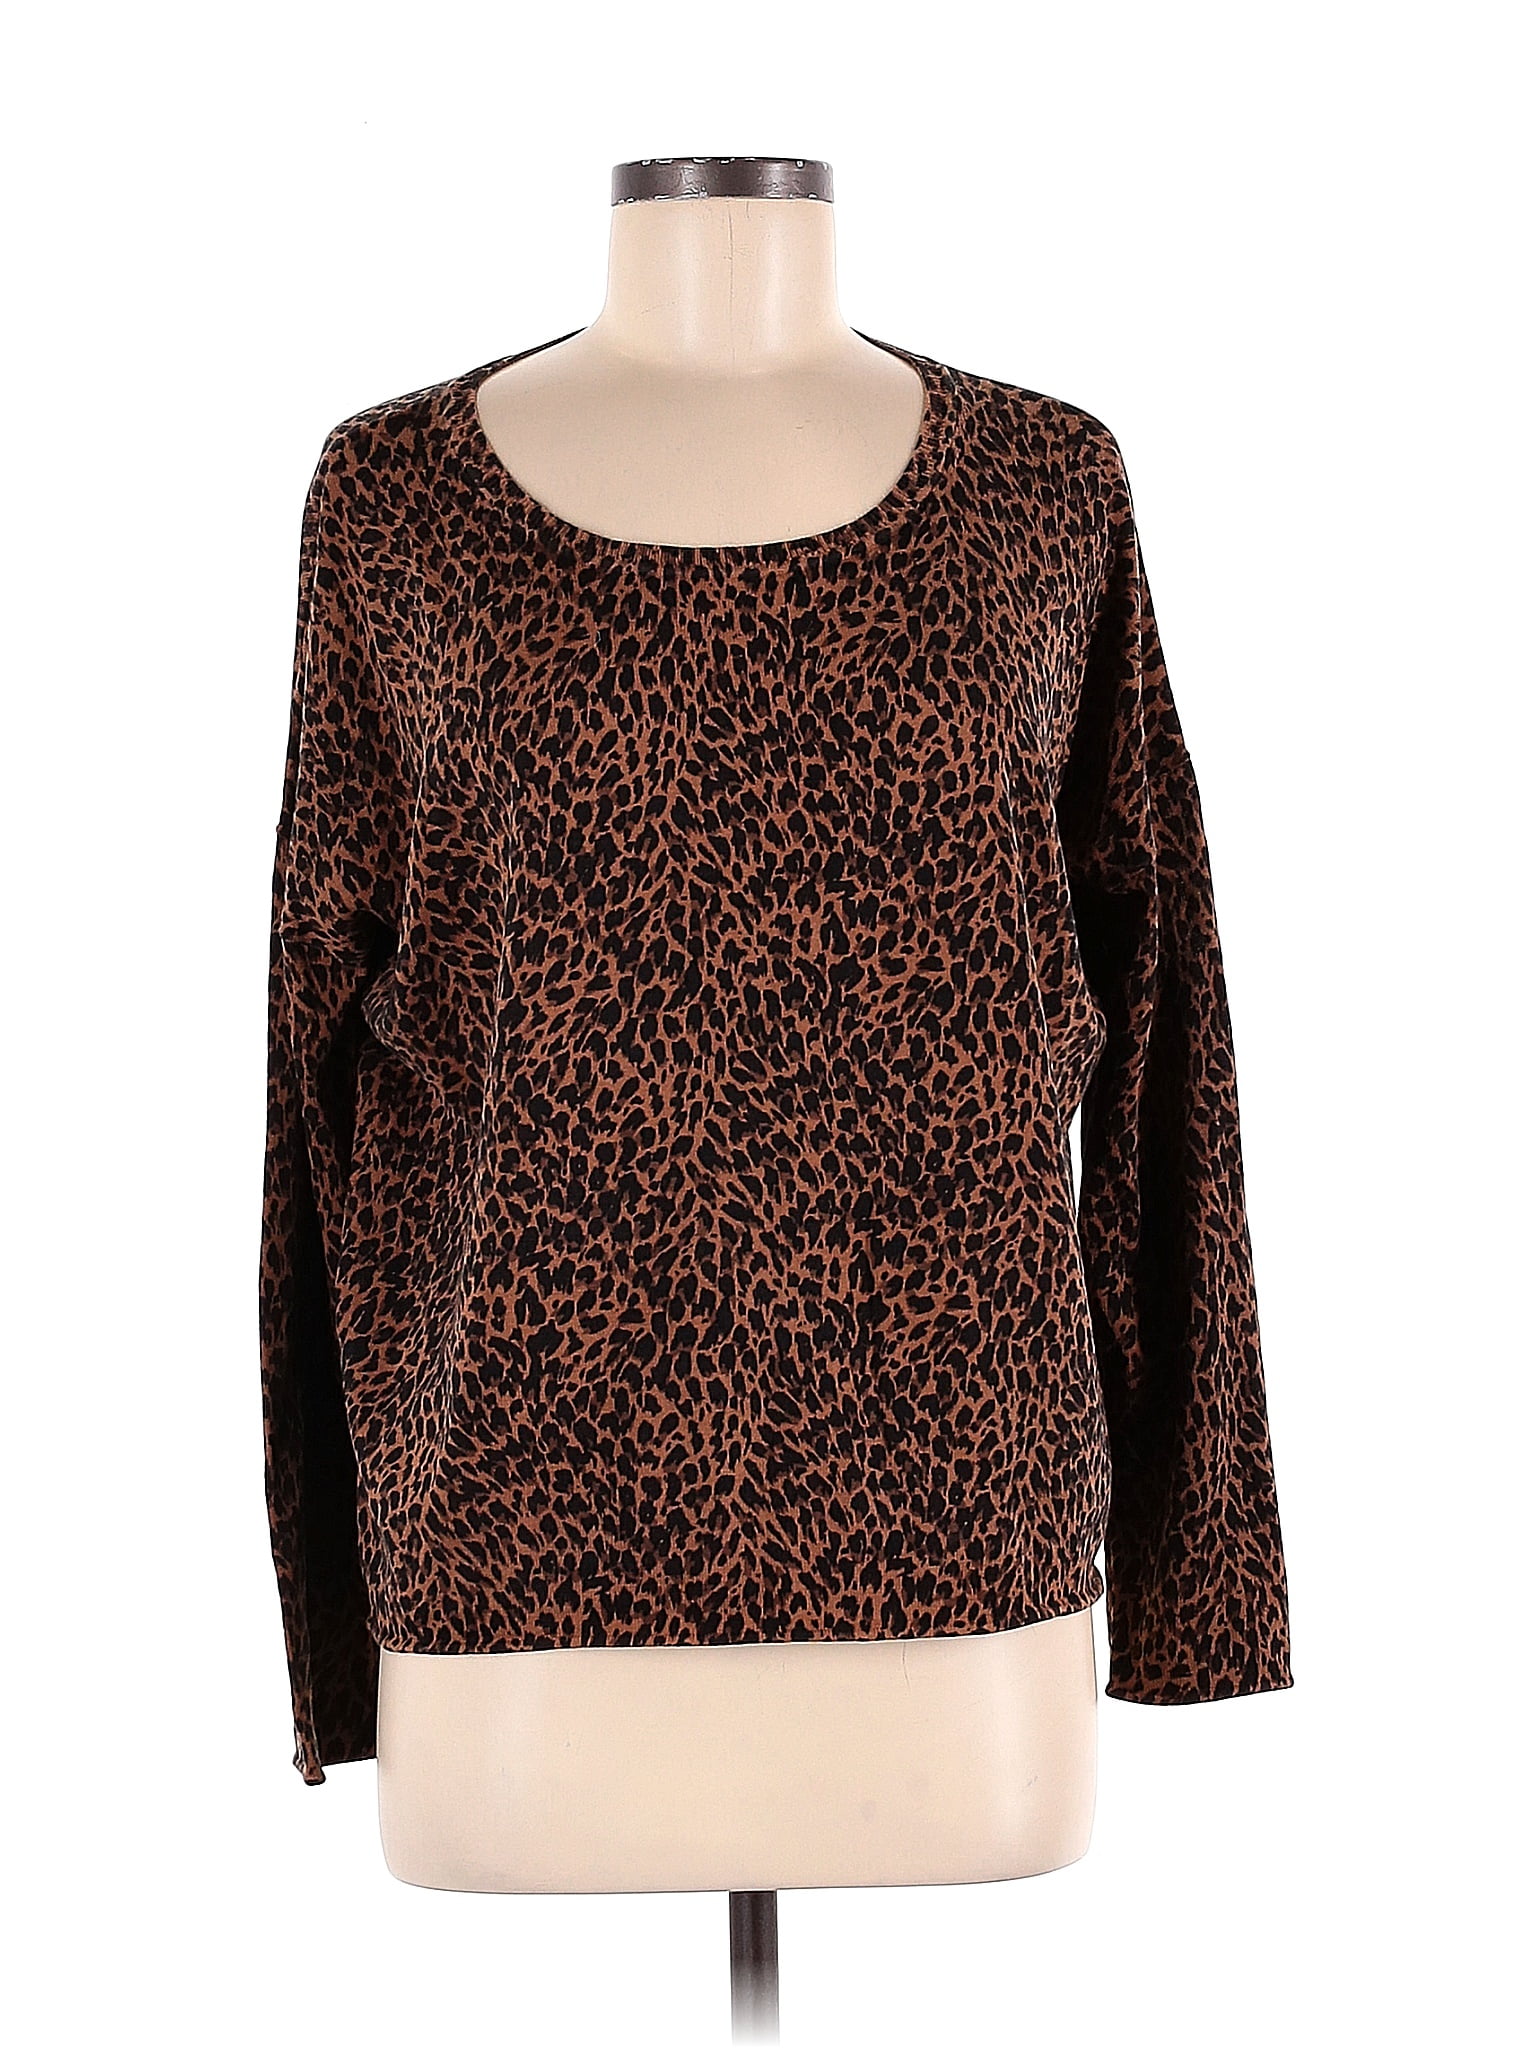 Garnet Hill Color Block Leopard Print Brown Sweatshirt Size M - 77% off ...